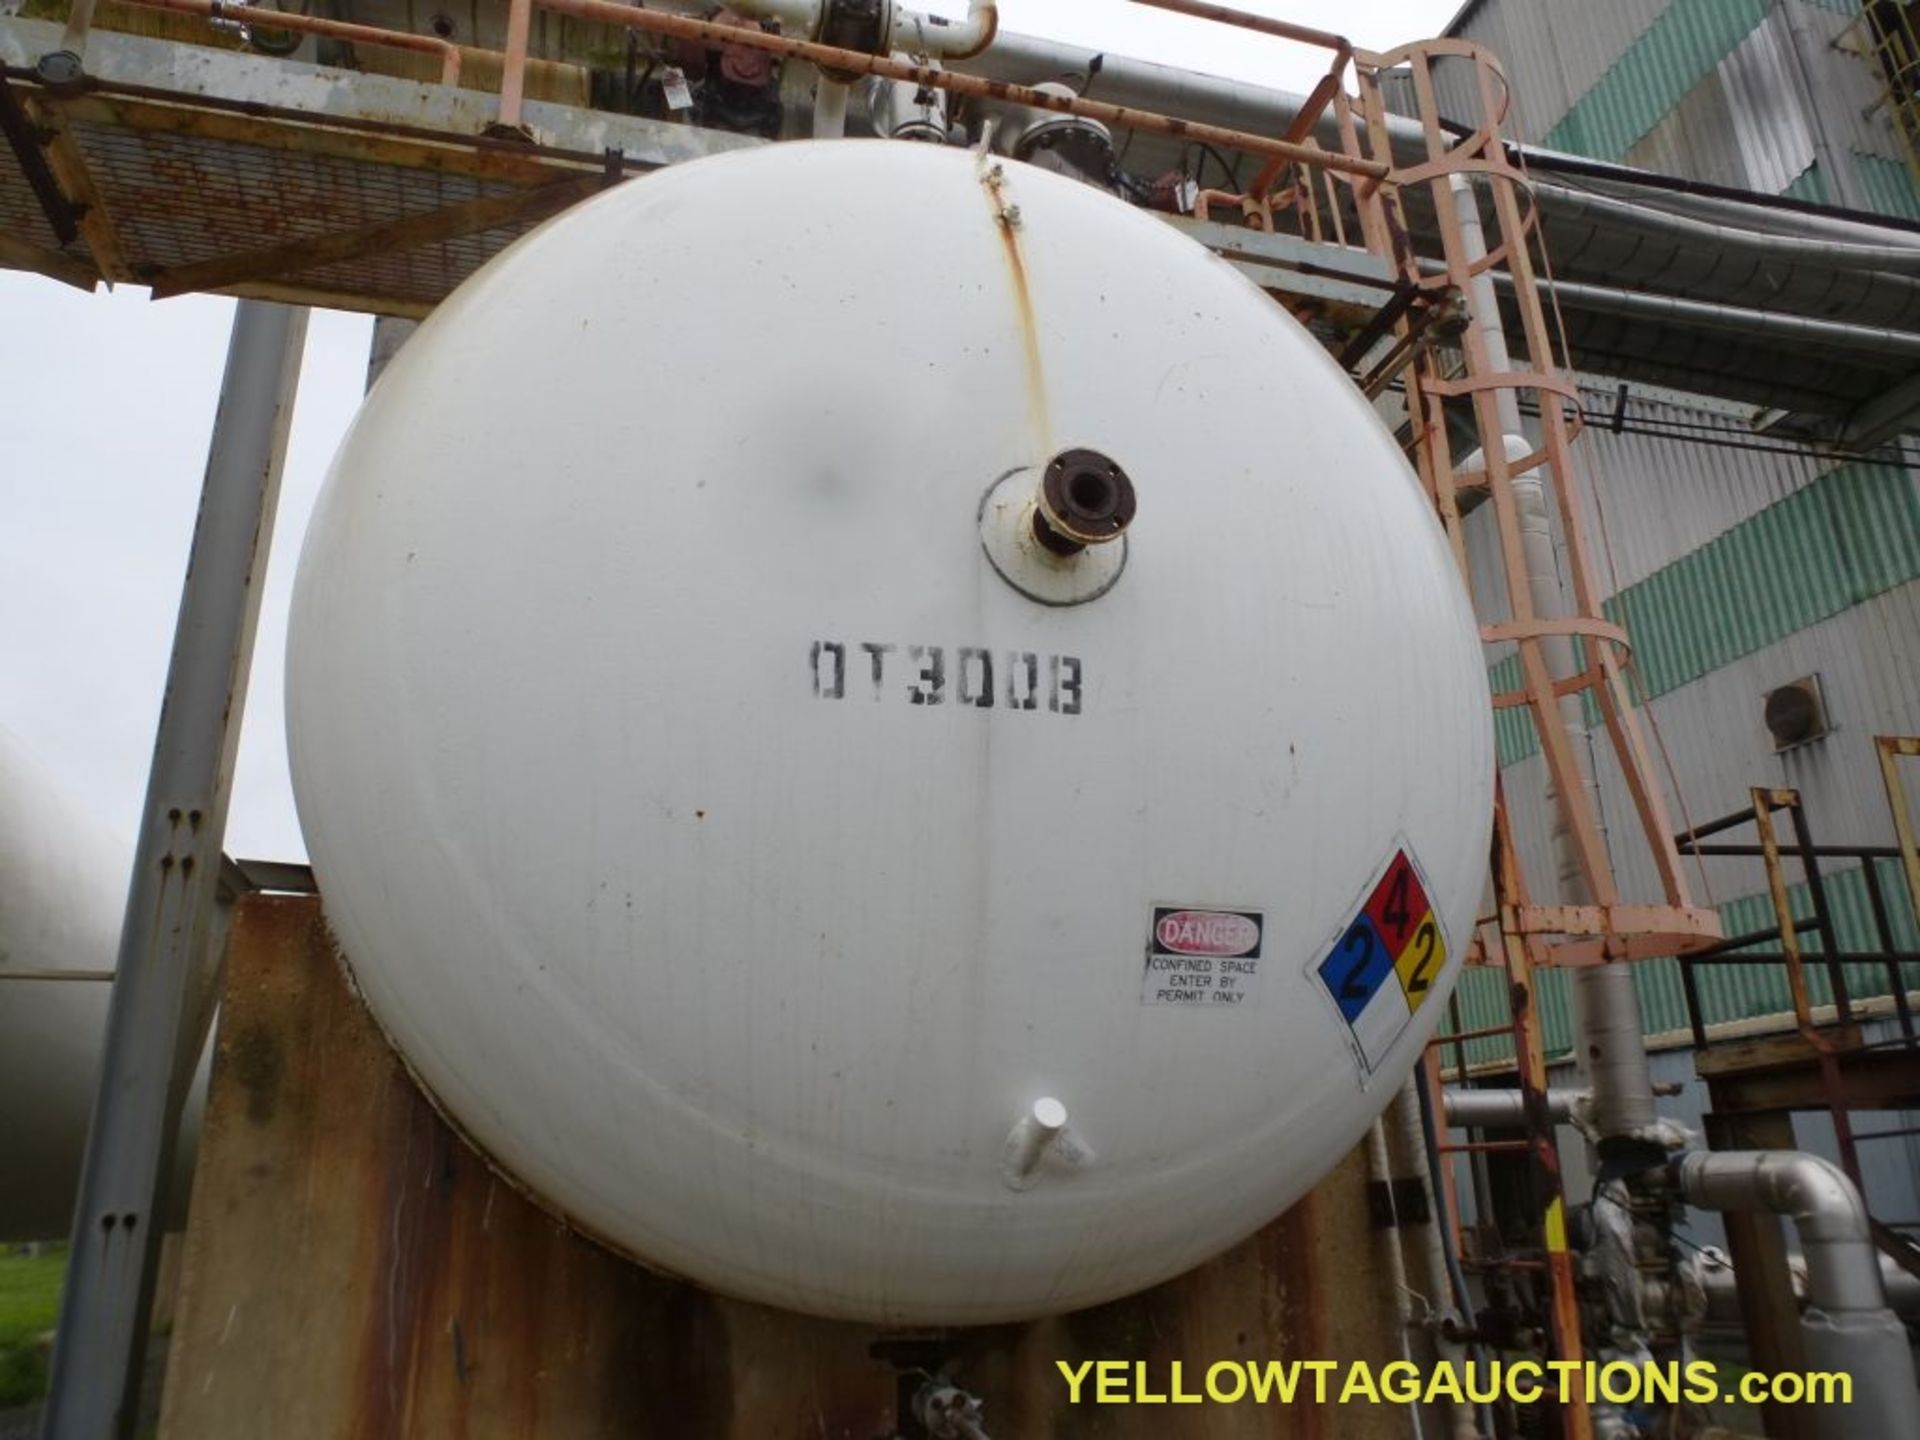 30,000 Gallon Pressure Vessel - 803" Length; PSI: Original 200, Recertified at 125; Includes: 2 - Image 7 of 17